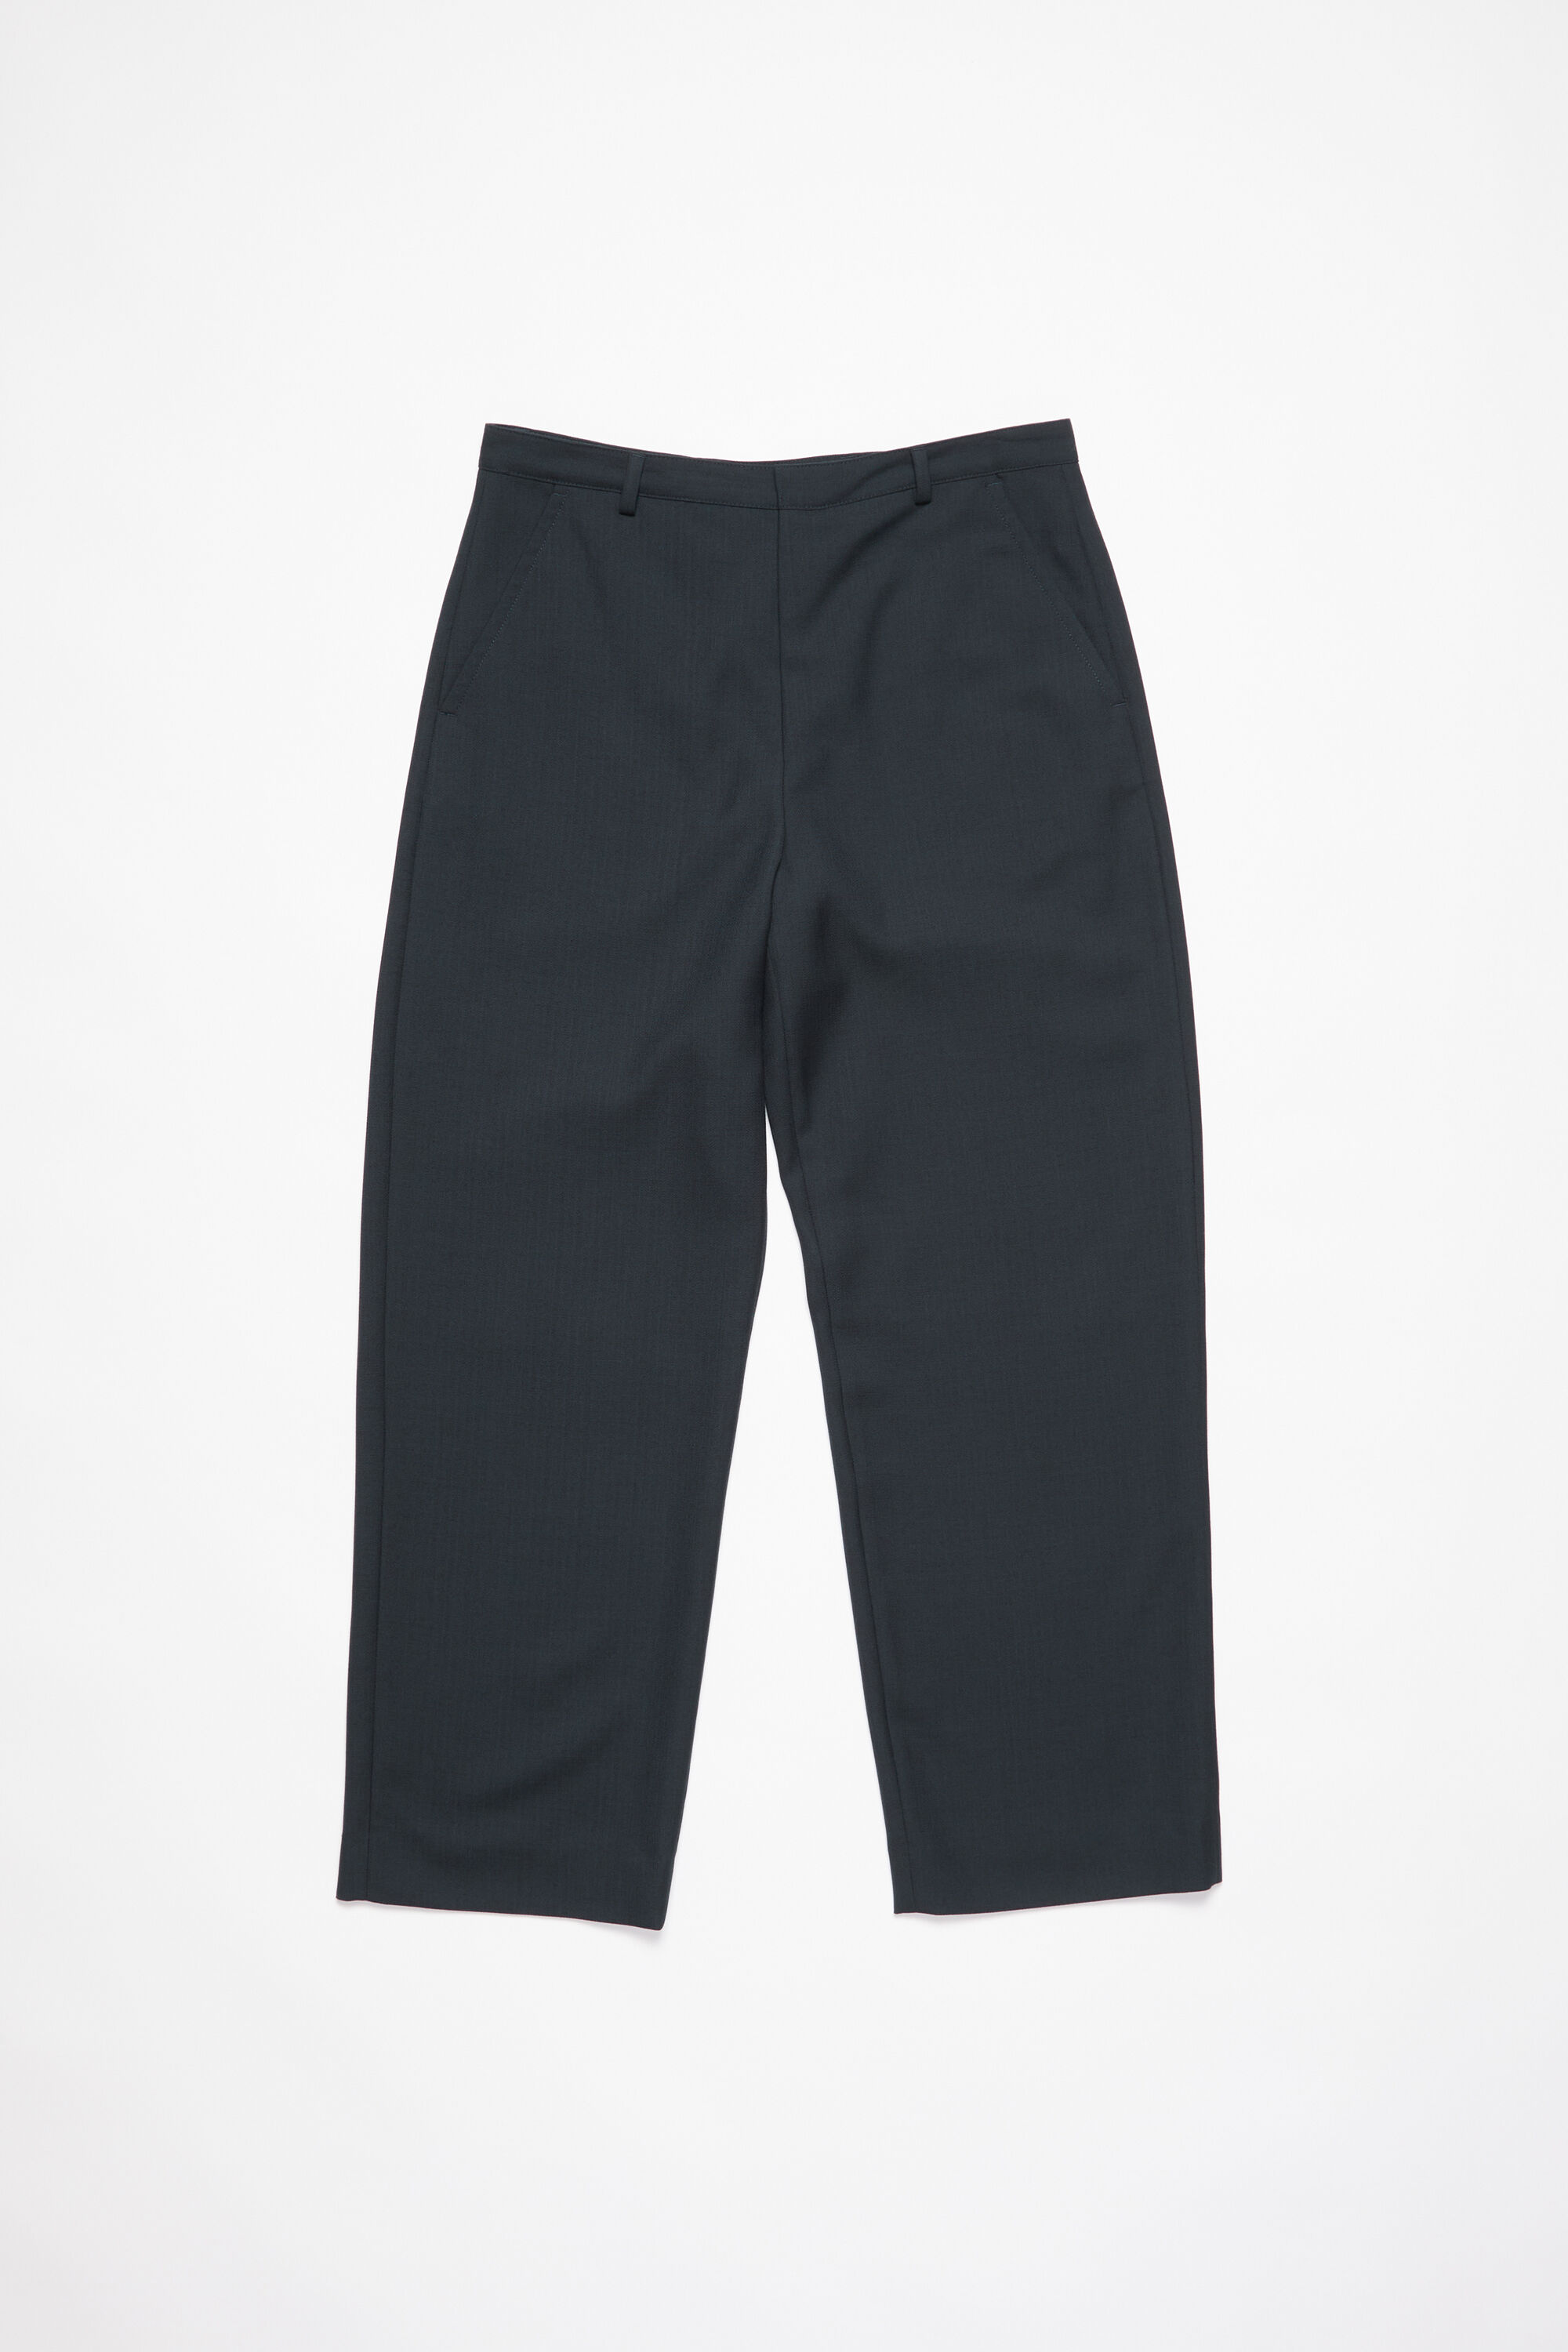 Men's Herringbone Wool Blend Trousers High Waist Straight Long Casual Pants  HOT | eBay